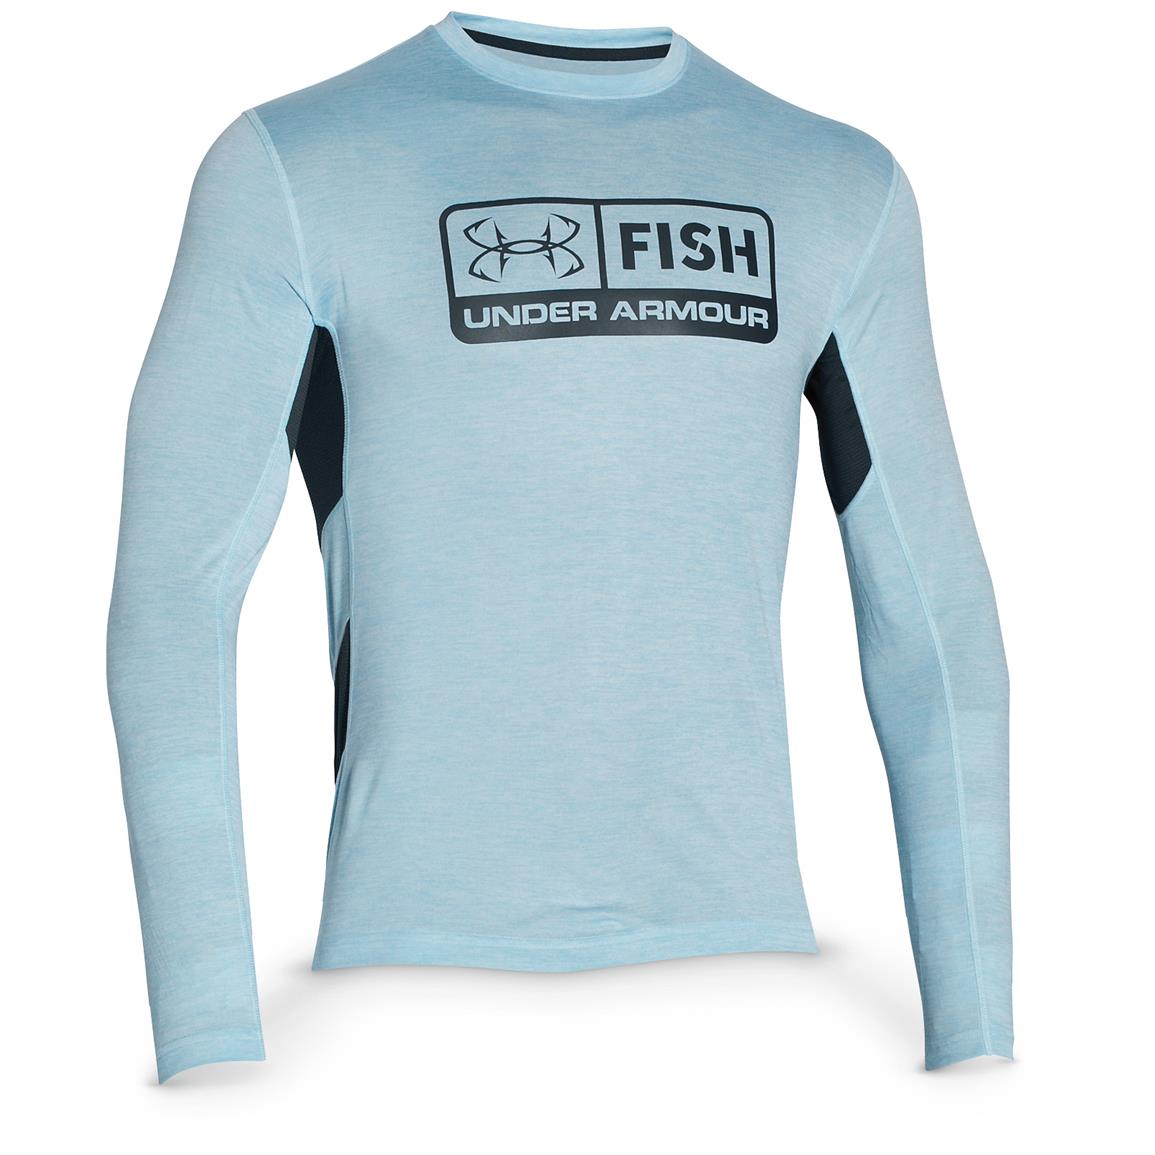 Under Armour Men's Fish/Tech Long Sleeve T-Shirt - 655758, Shirts